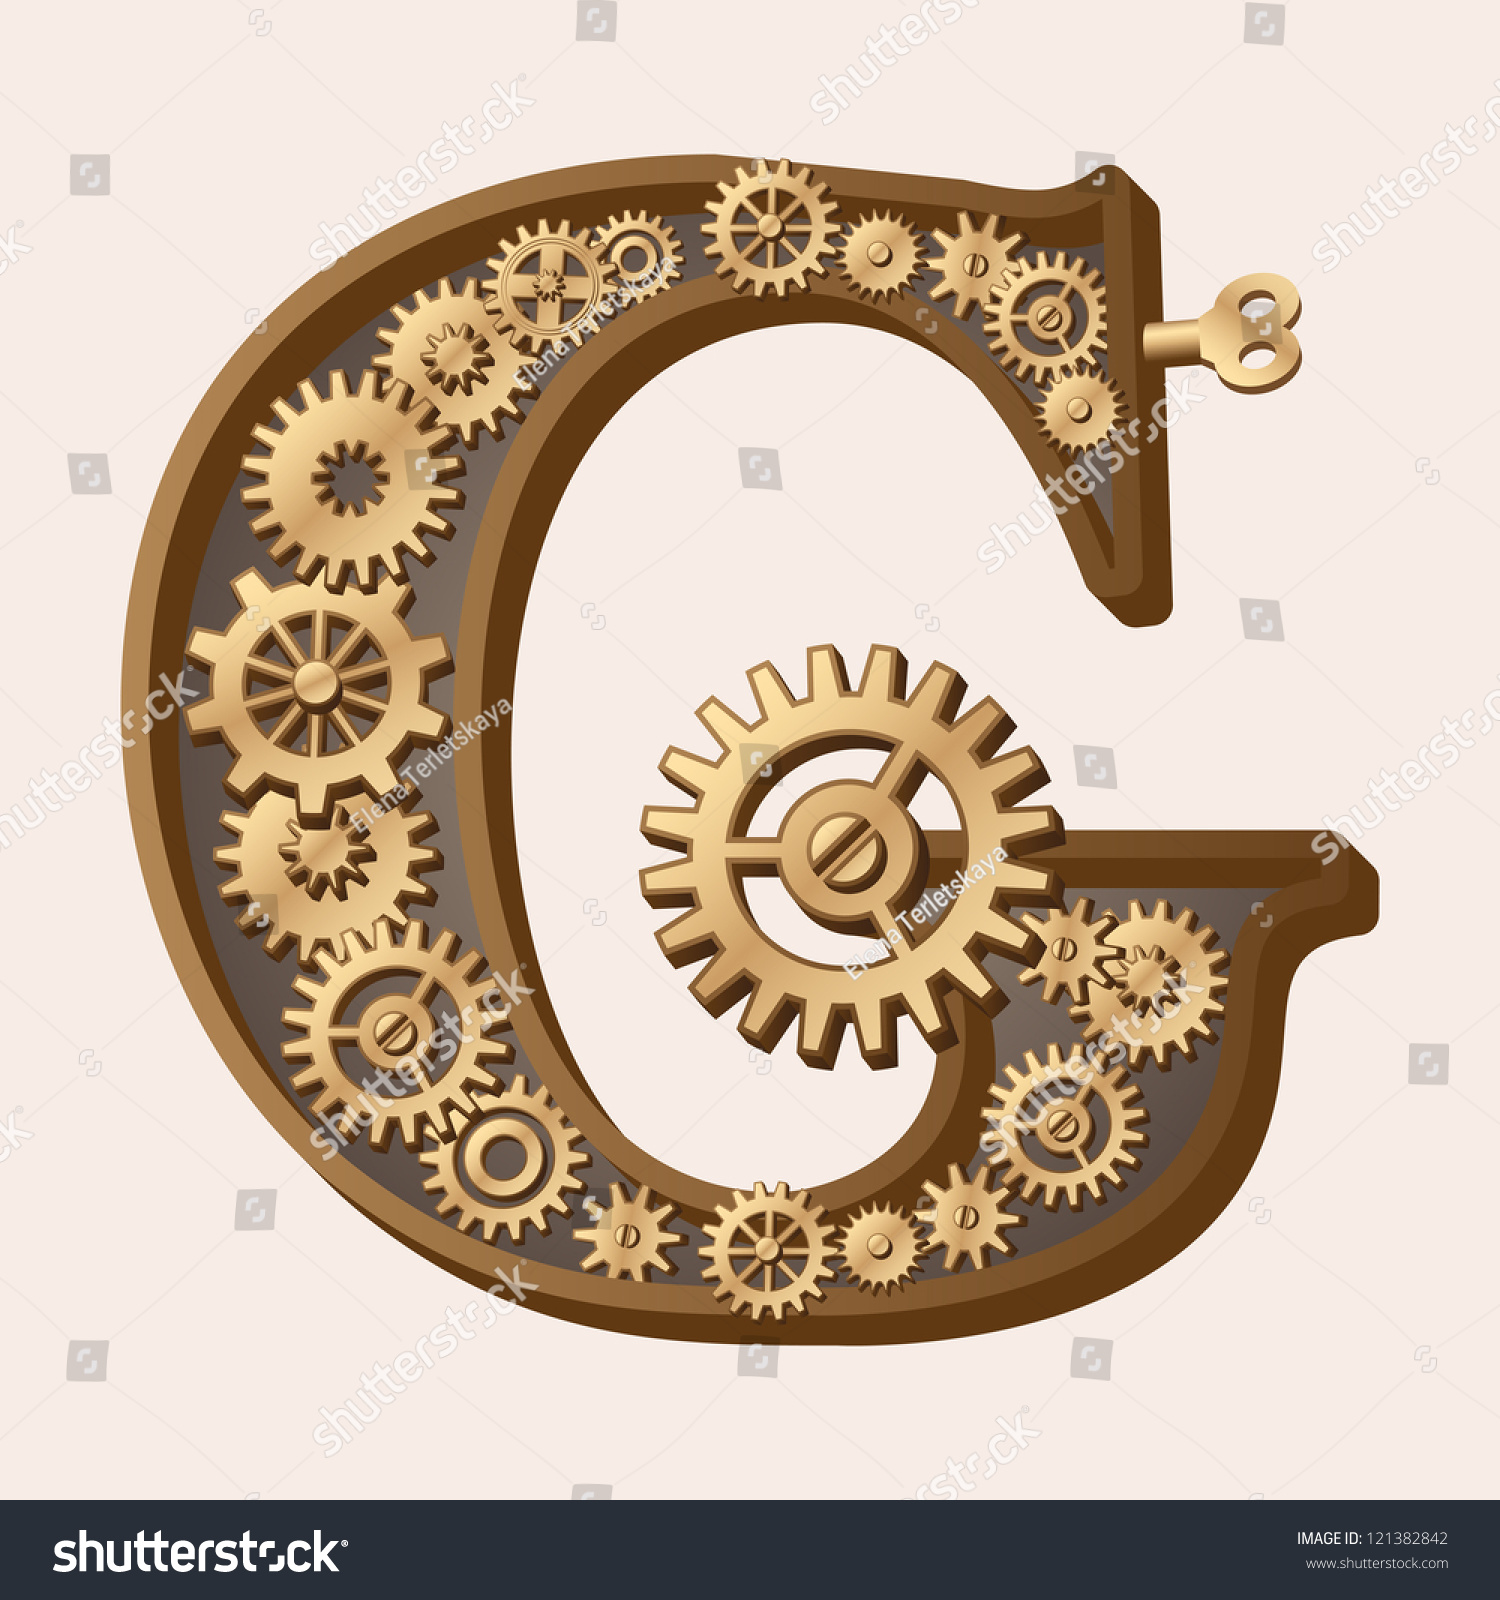 Mechanical Alphabet Made From Gears. Letter G. Raster Version. Vector ...